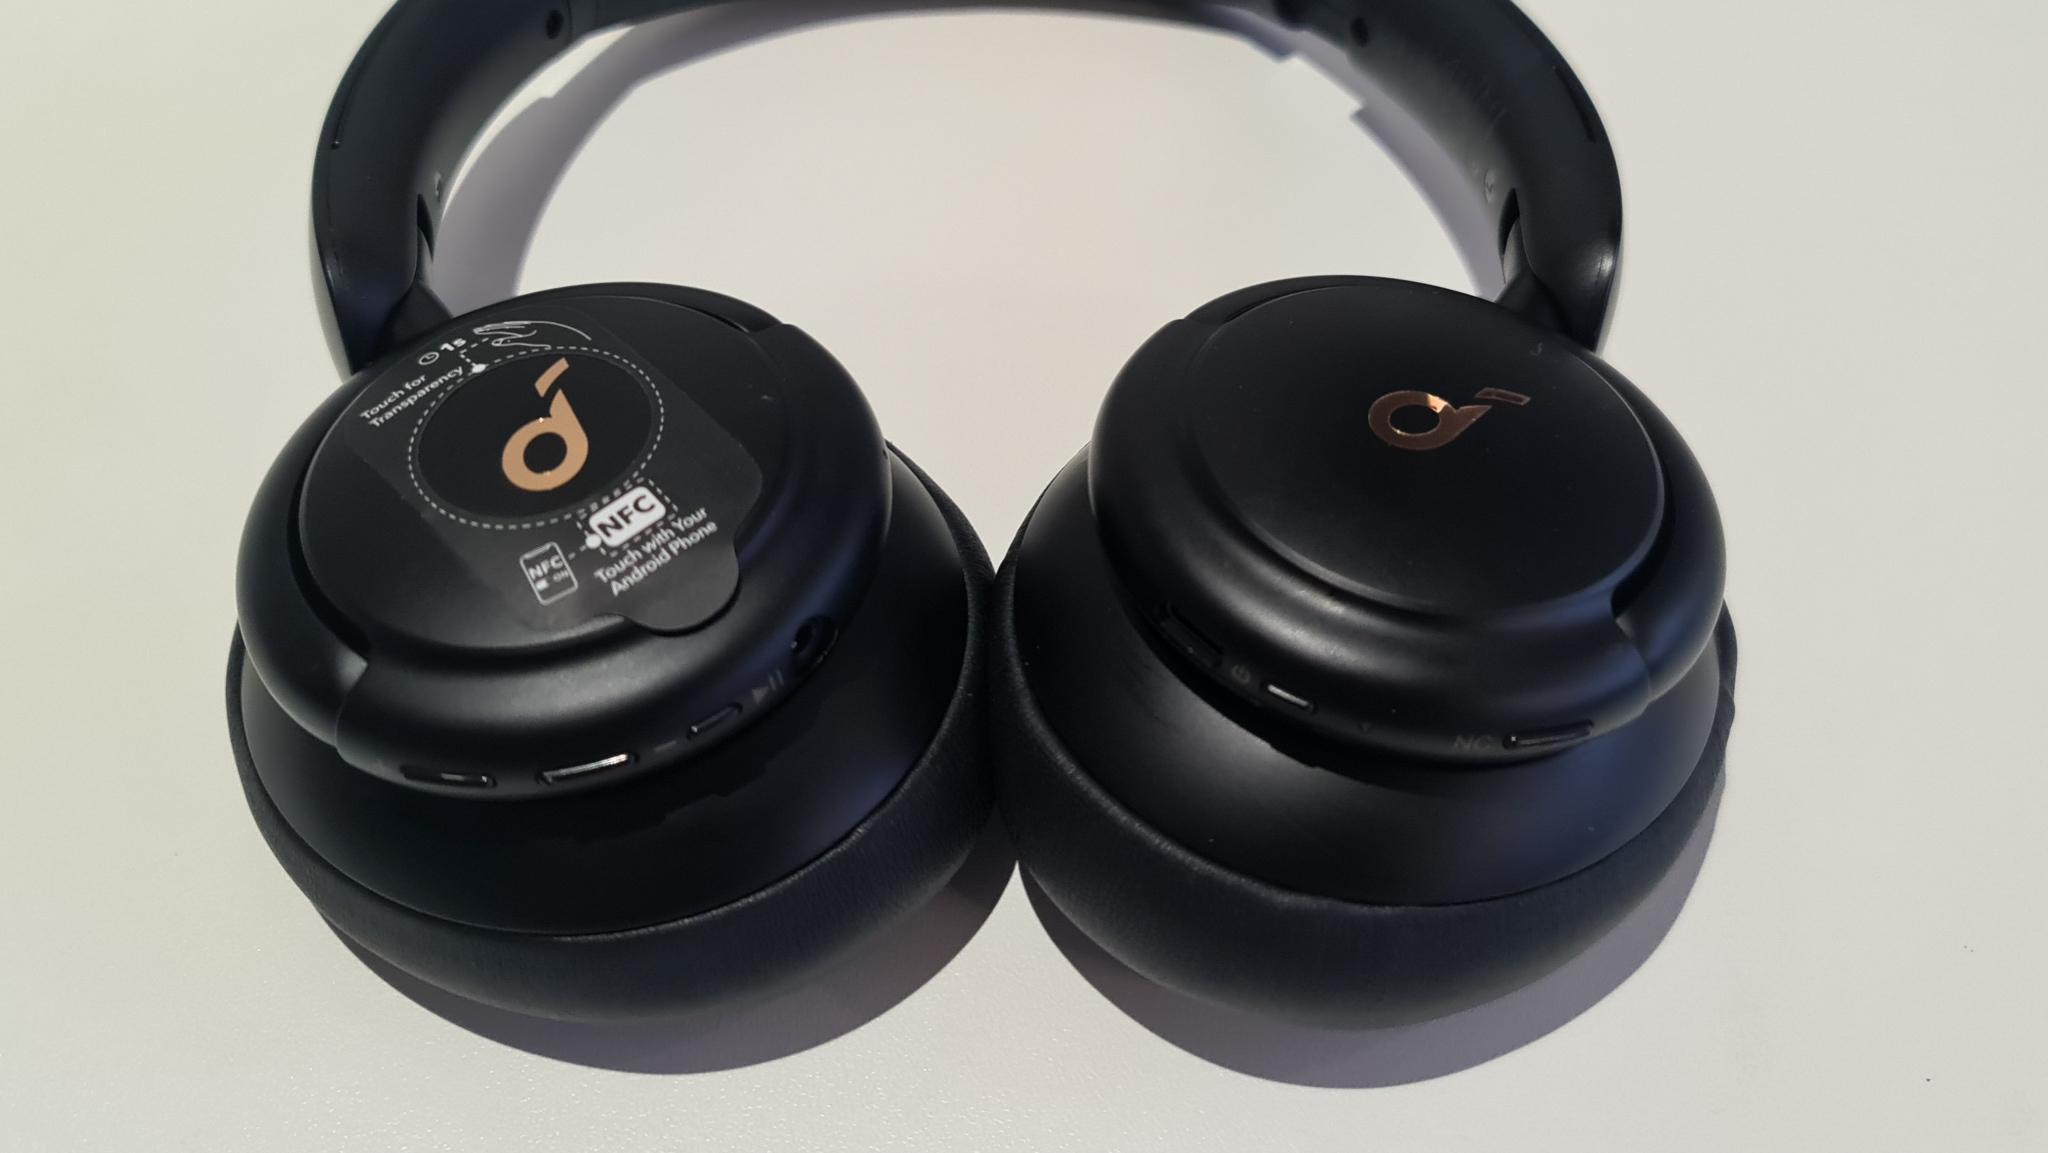 Anker Soundcore Life Q30 Review: Affordable ANC Headphones